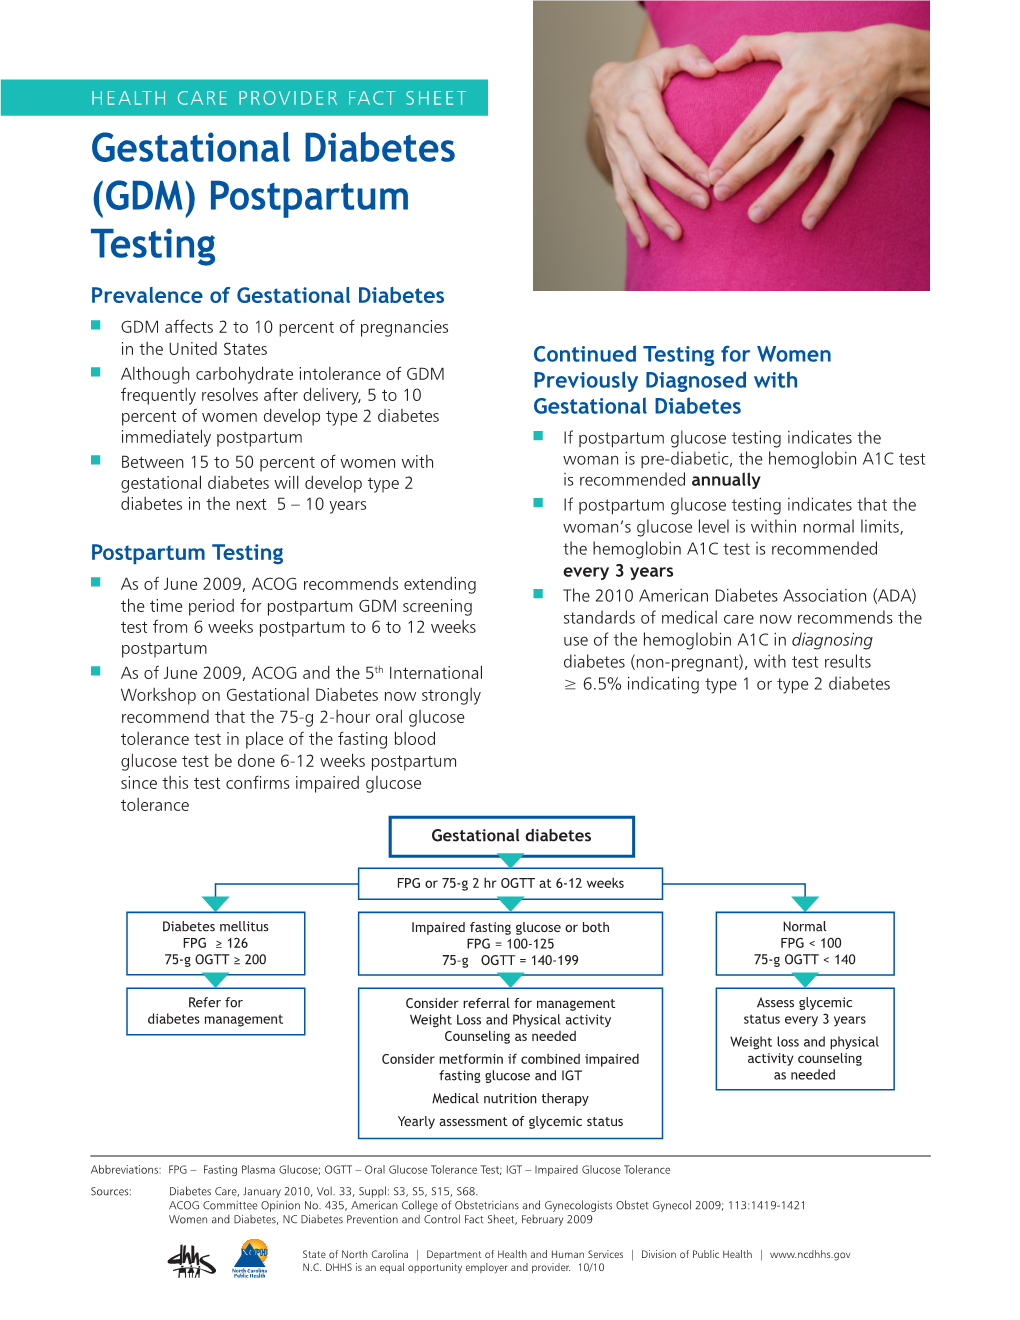 Gestational Diabetes (GDM) Postpartum Testing